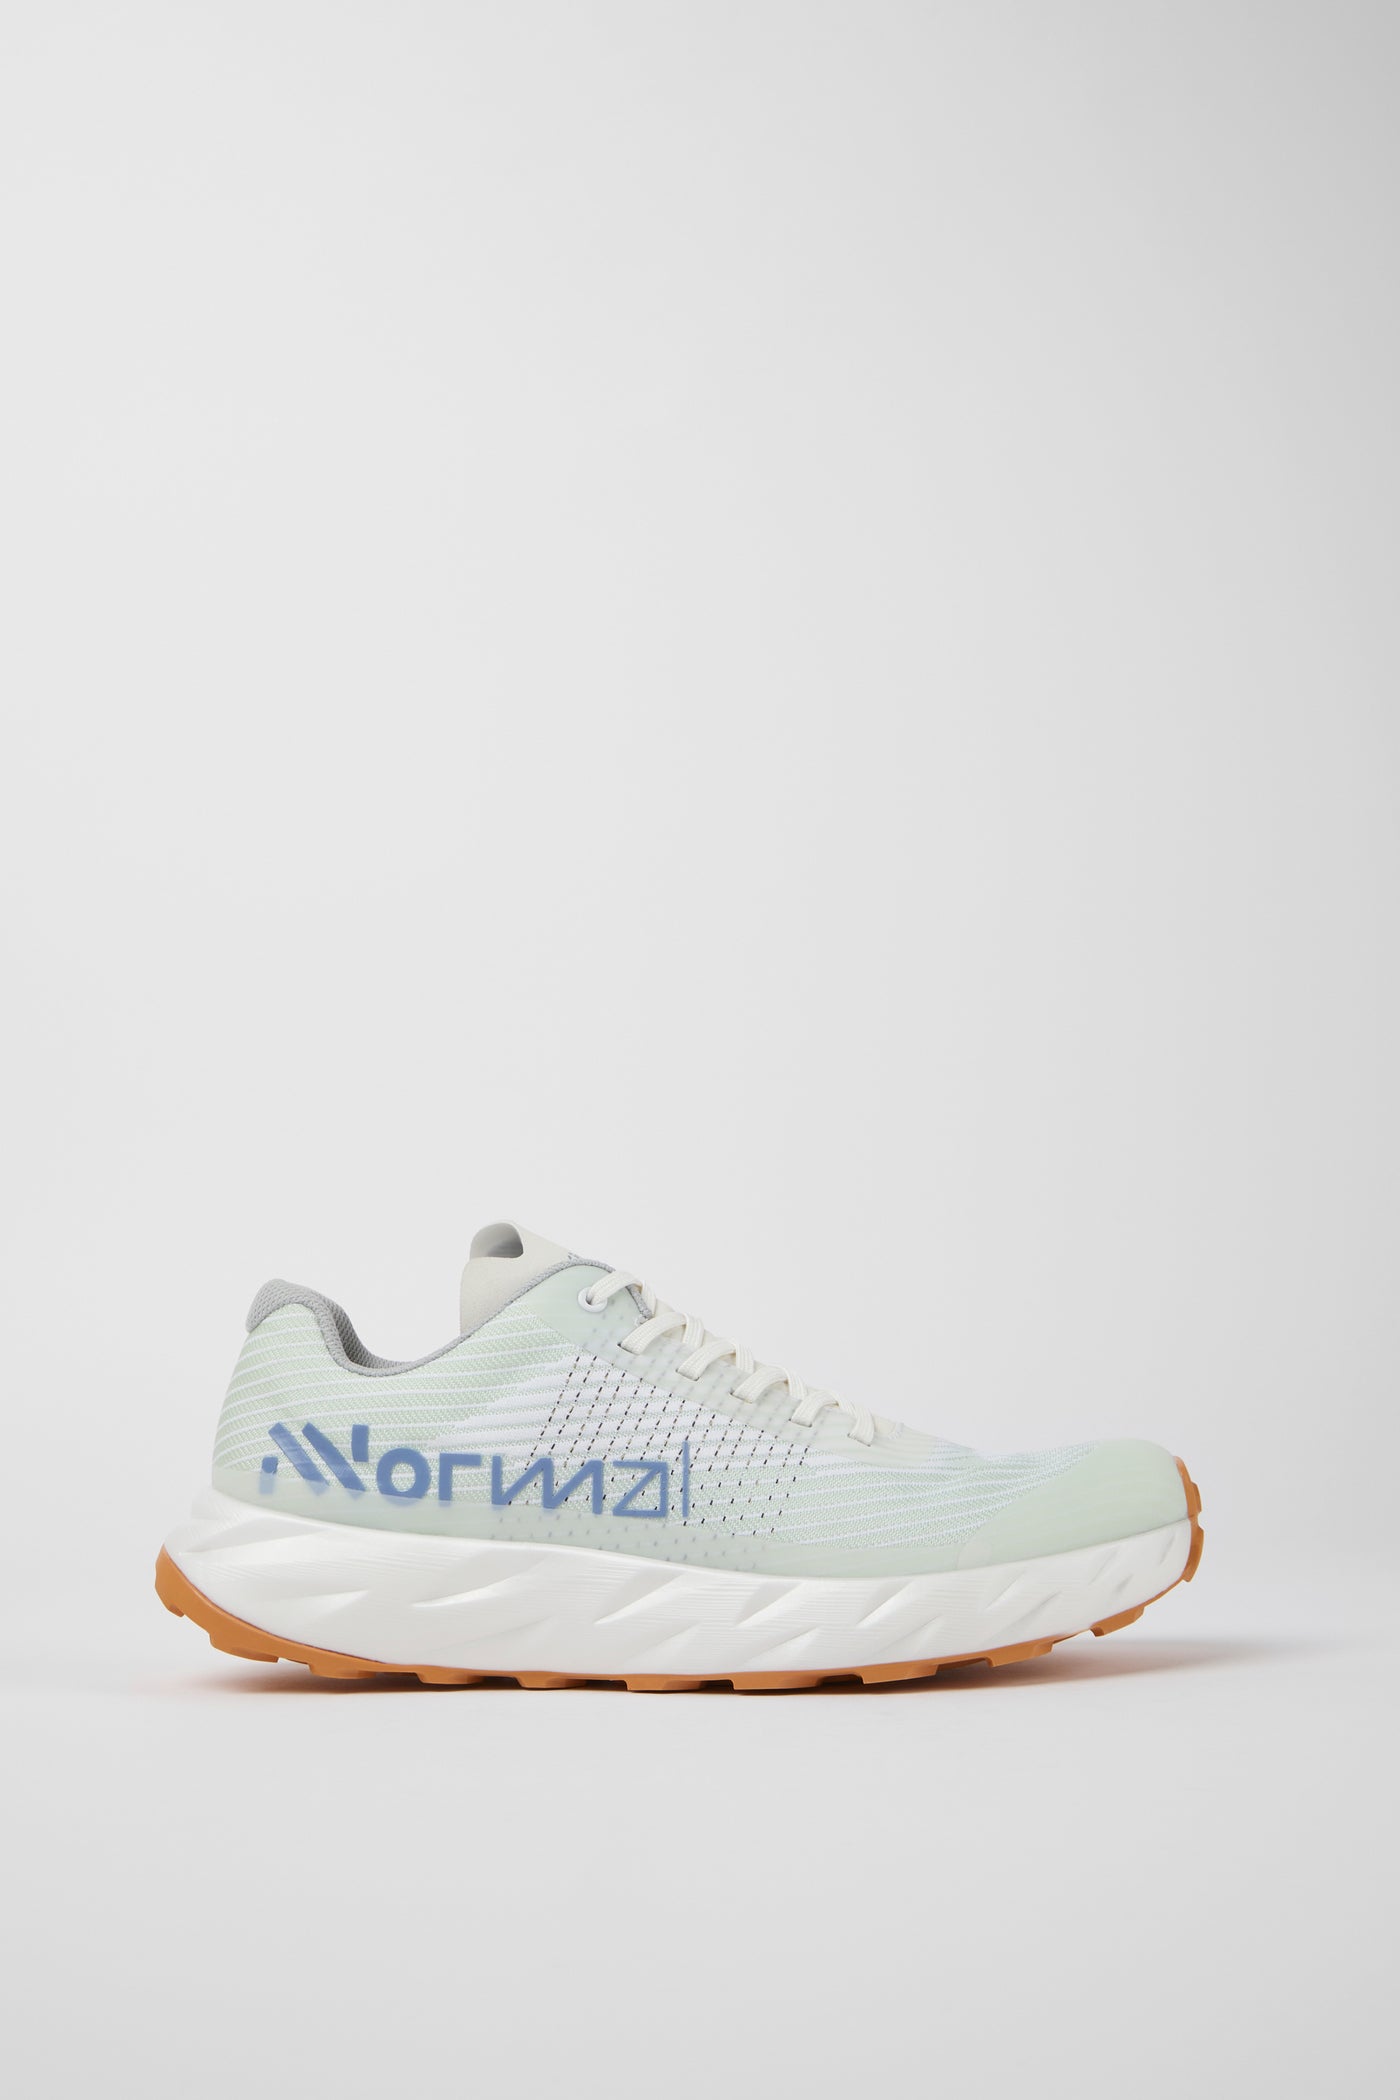 NNormal Kjerag High Performance Trail Running Shoe | NNormal | Trail Running